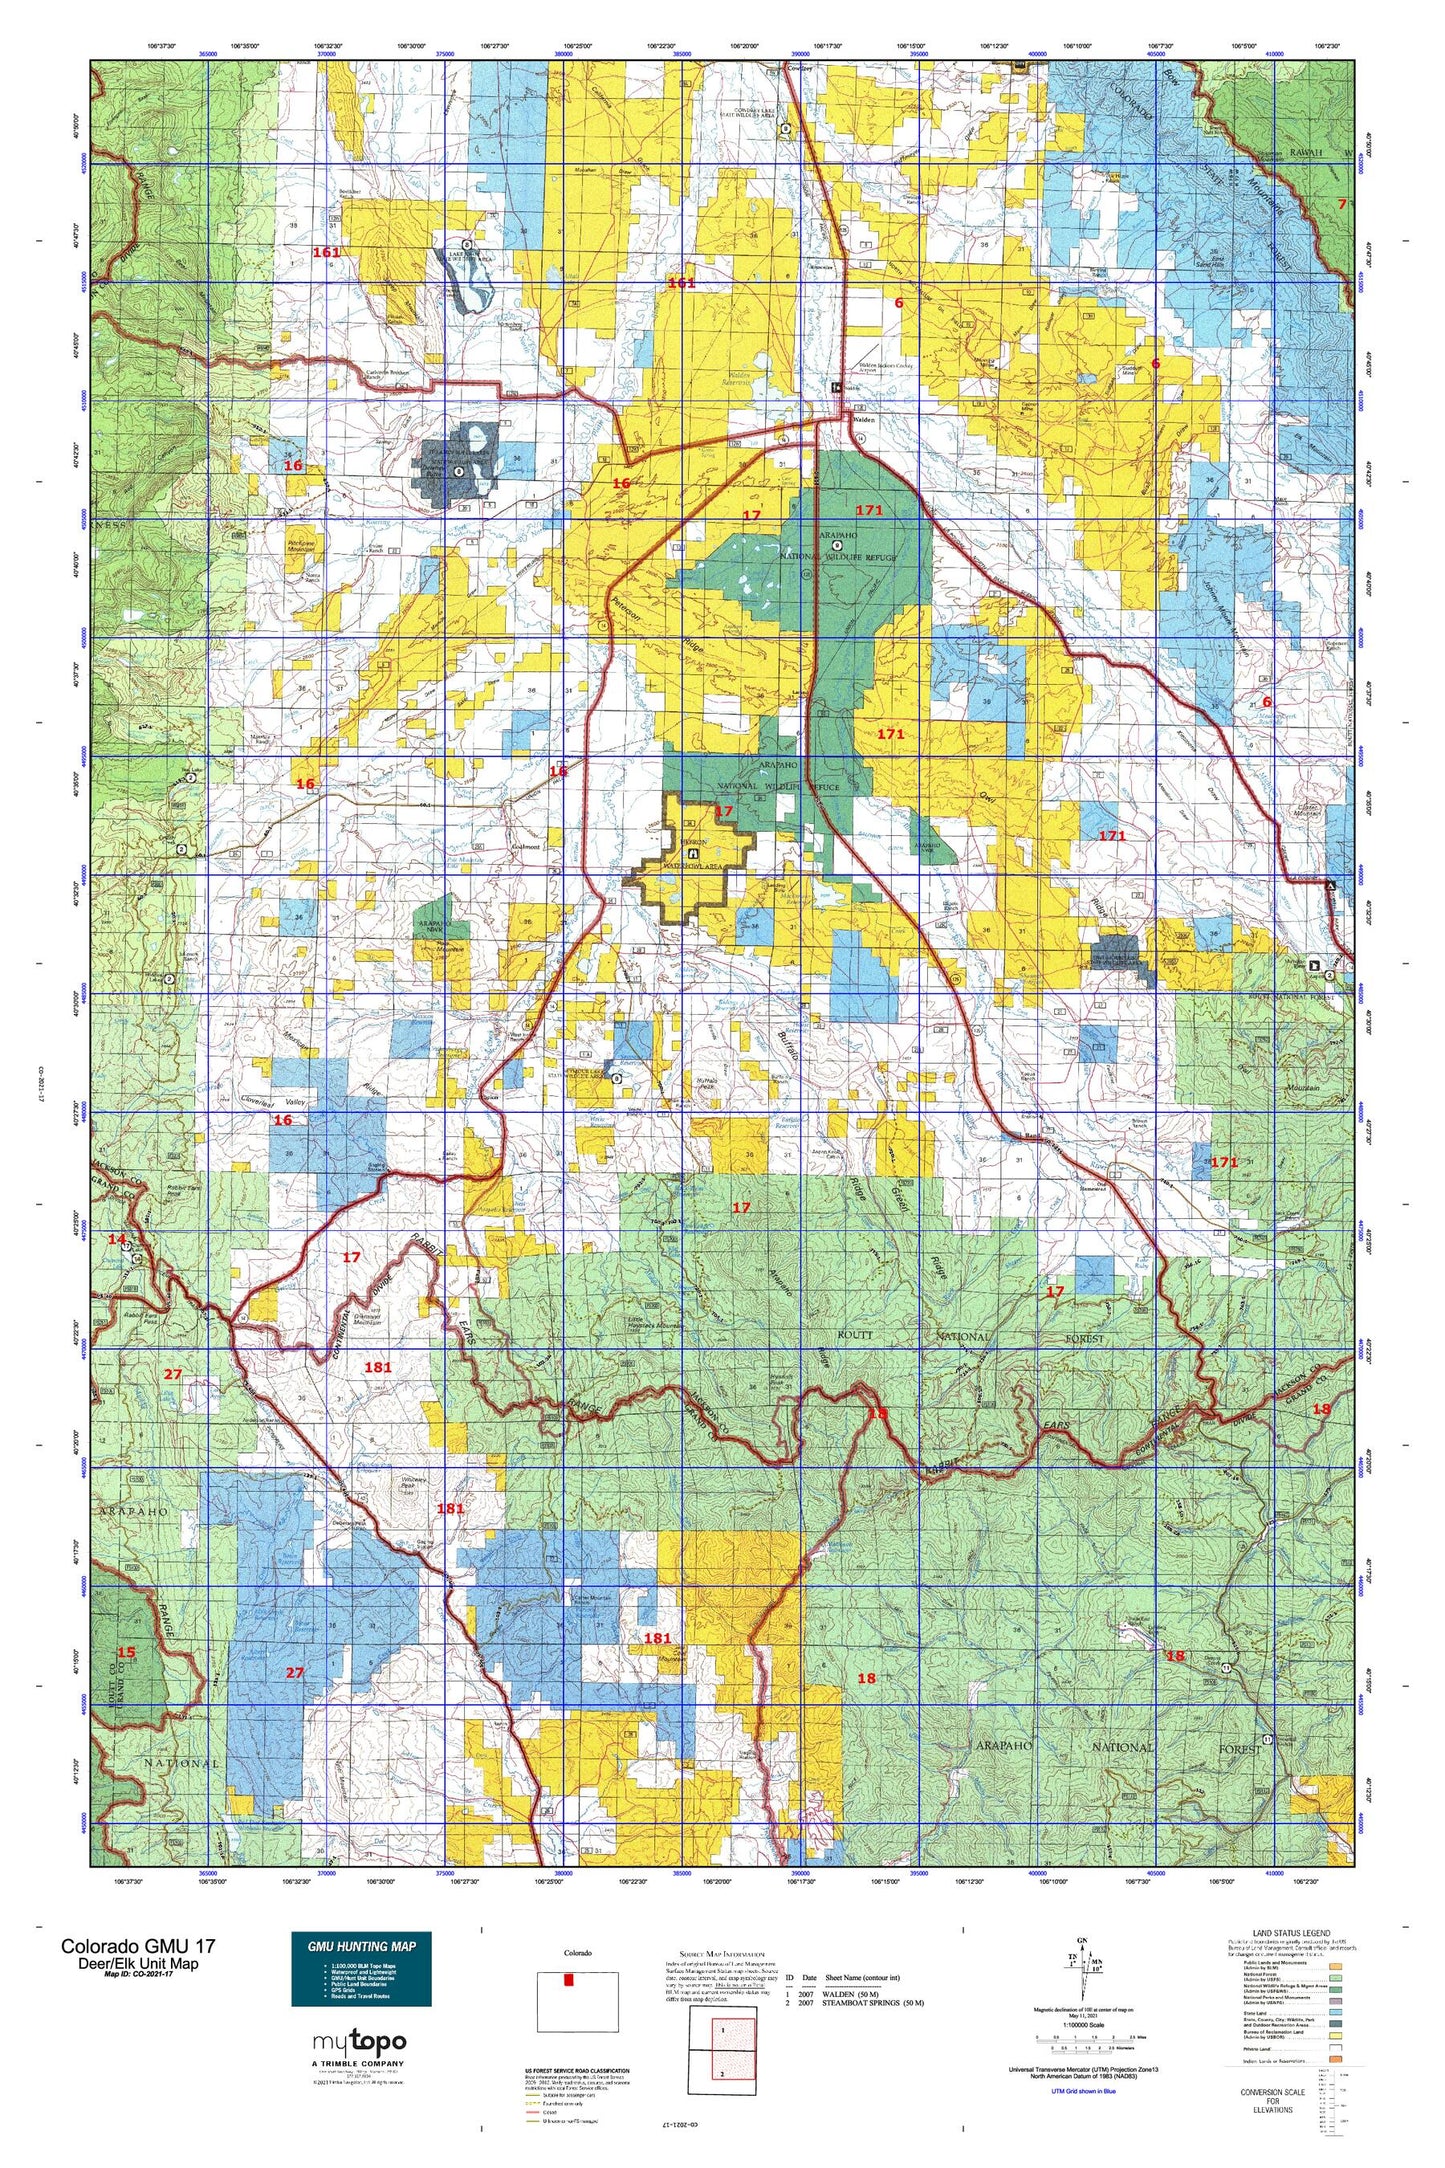 Colorado GMU 17 Map Image